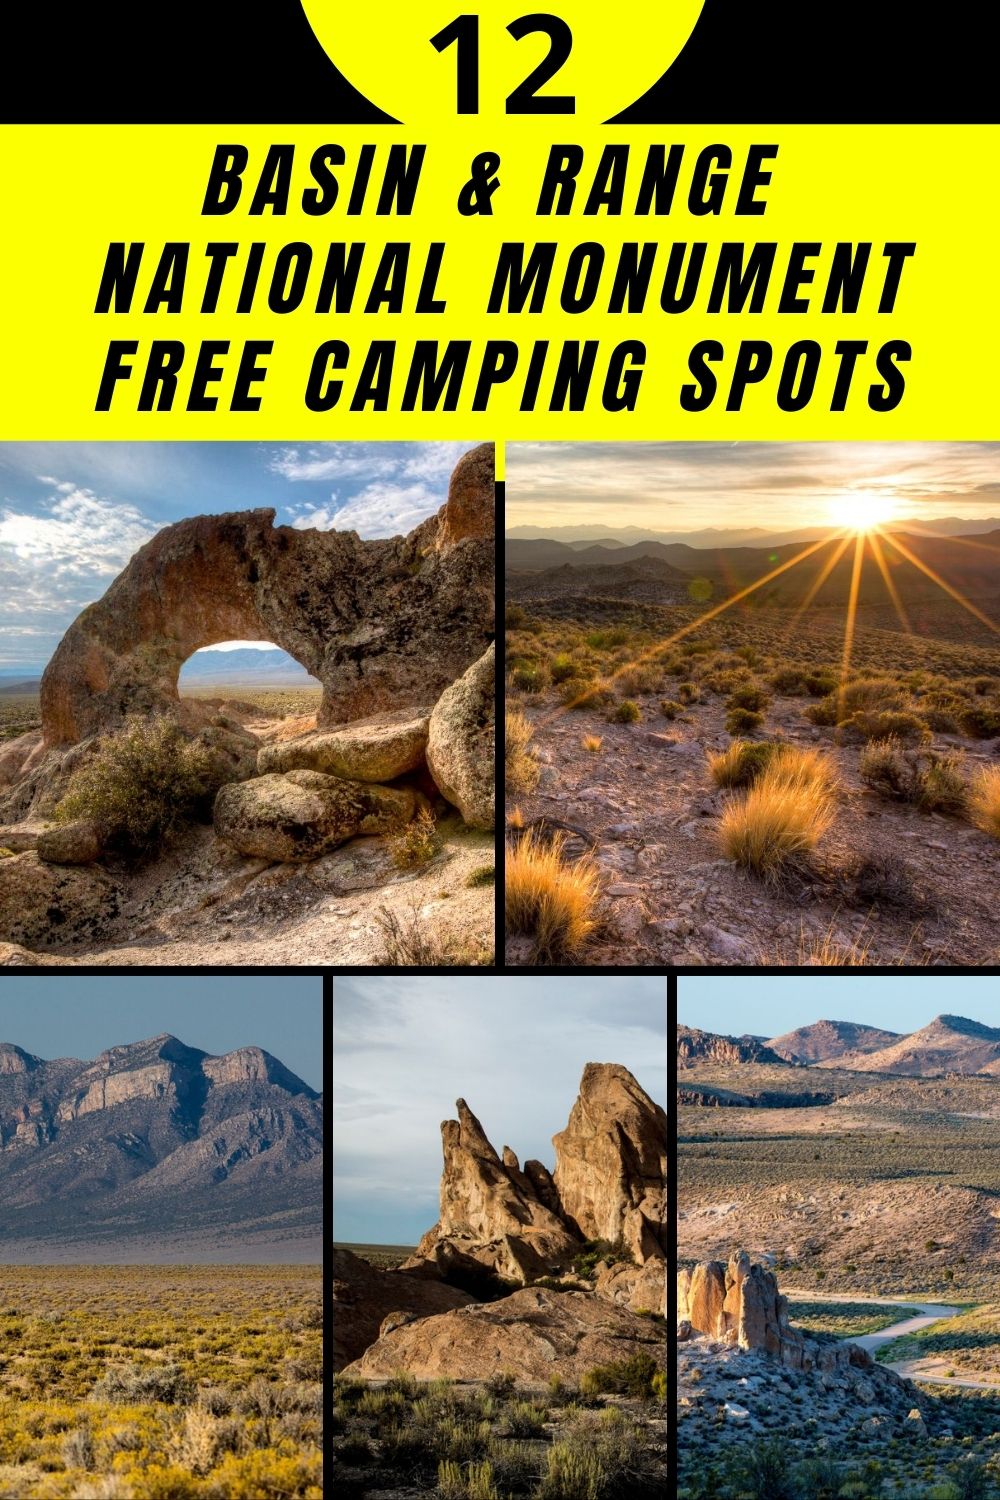 Basin & Range National Monument (6)